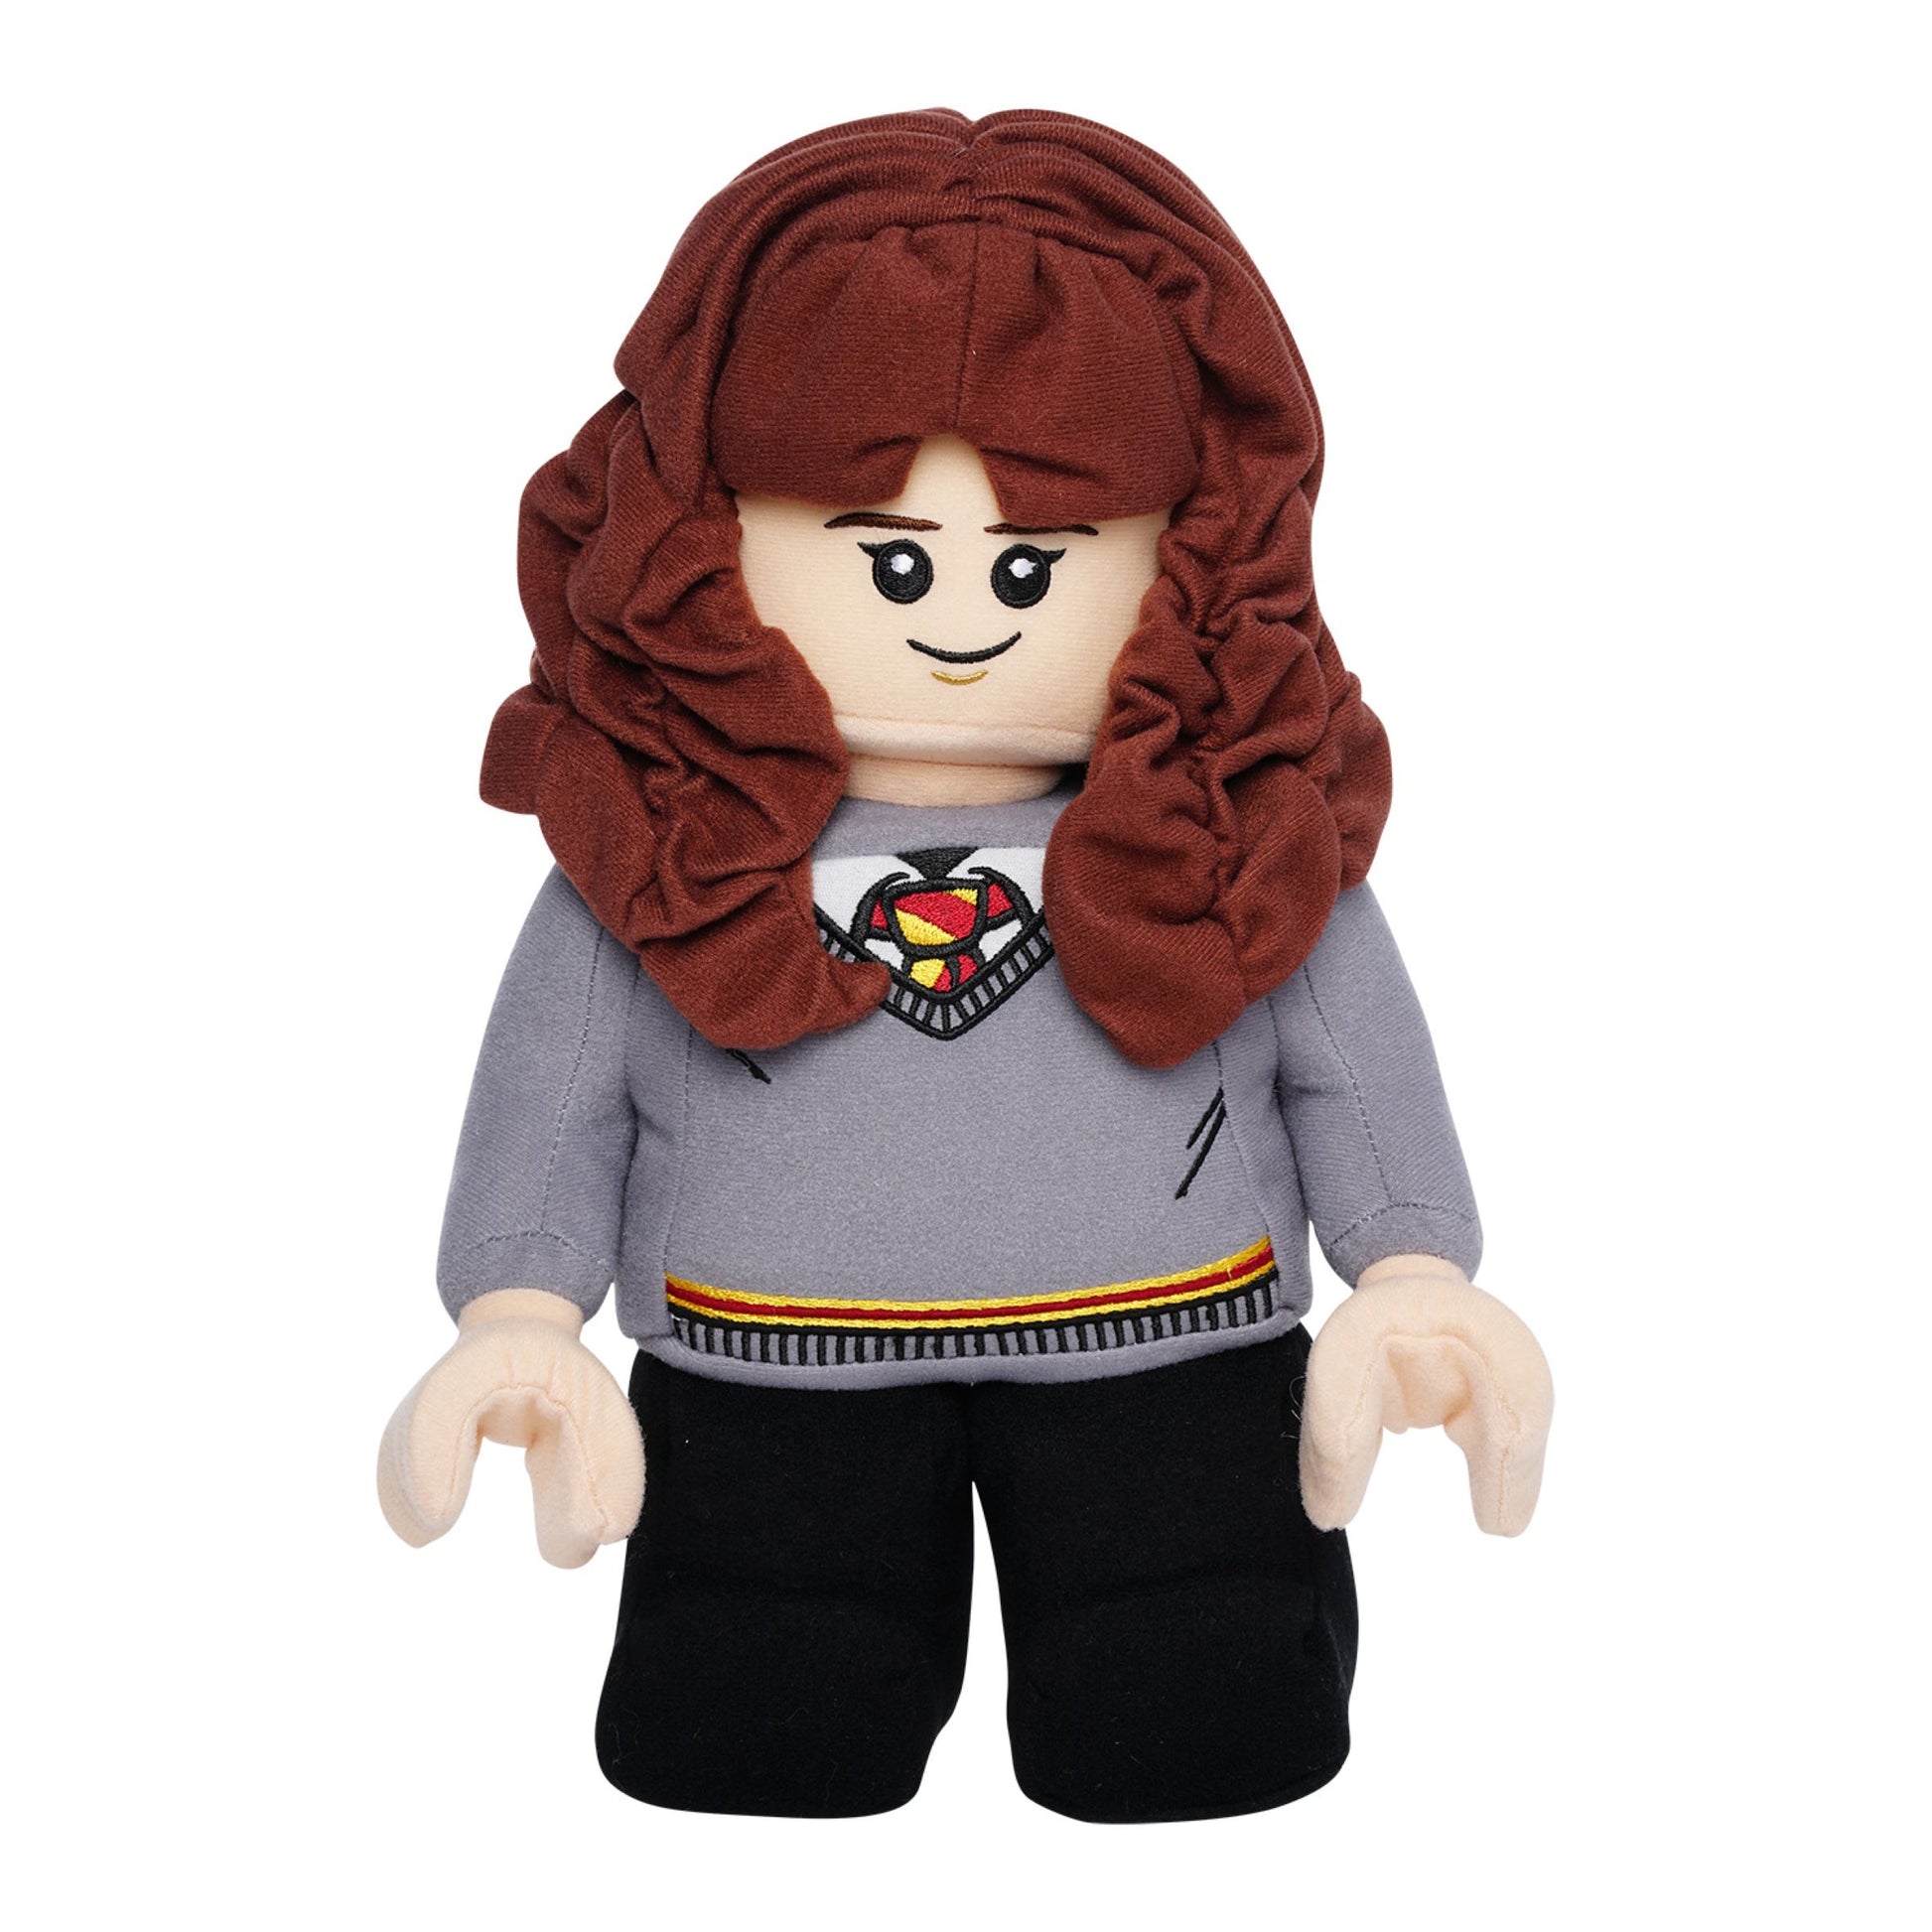 Manhattan Toy Co Lego Harry Potter Hermione Granger Plush